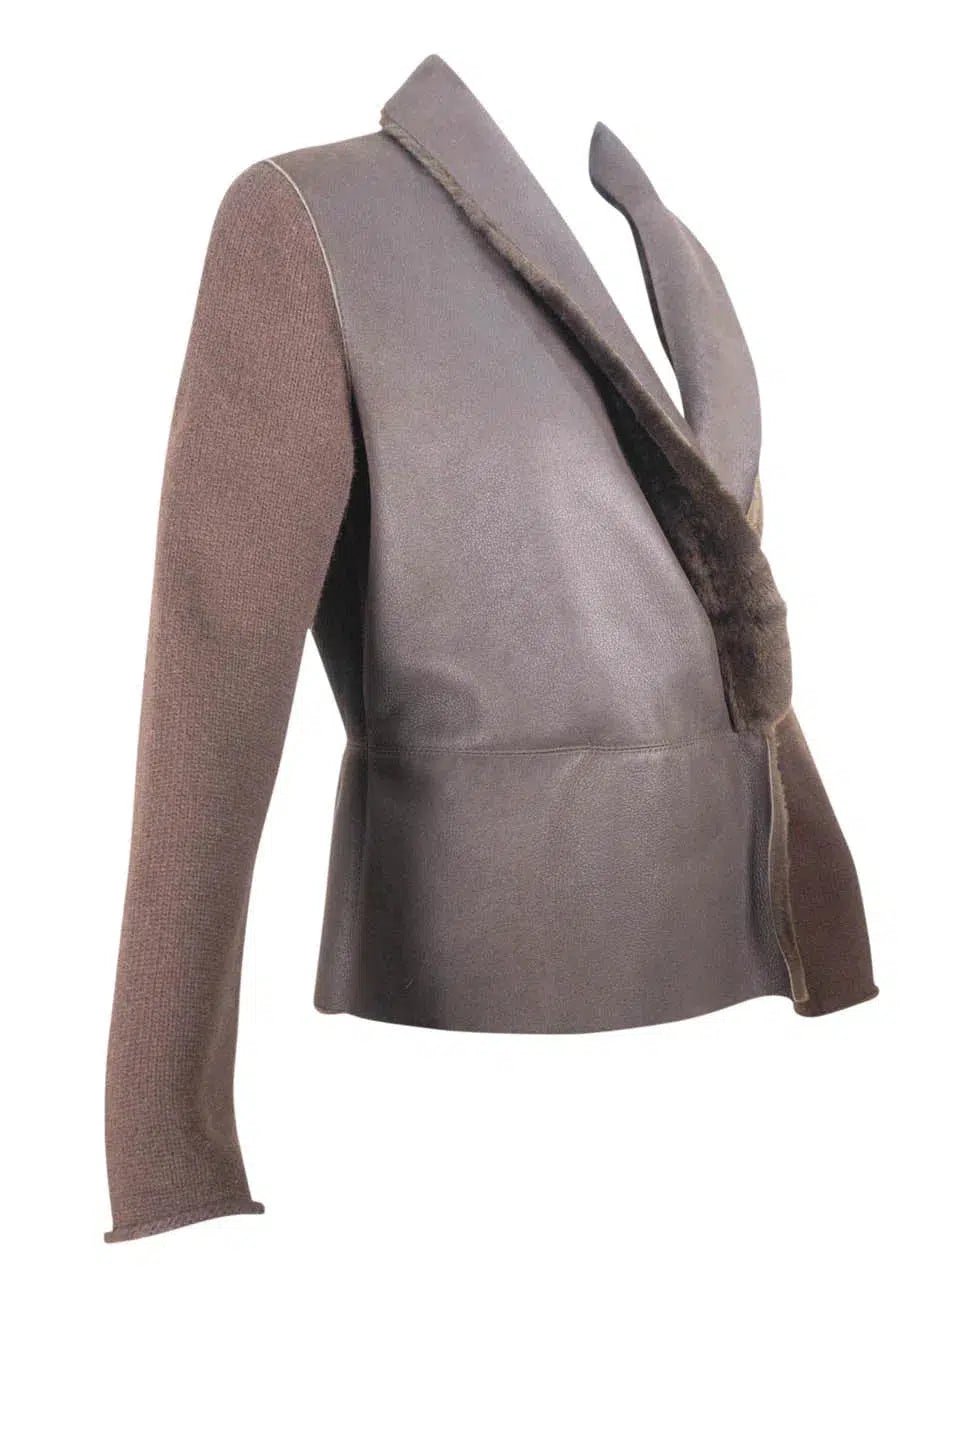 Brunello Cucinelli Brown Shearling Jacket Cashmere Trim Size L - Foxy Couture Carmel